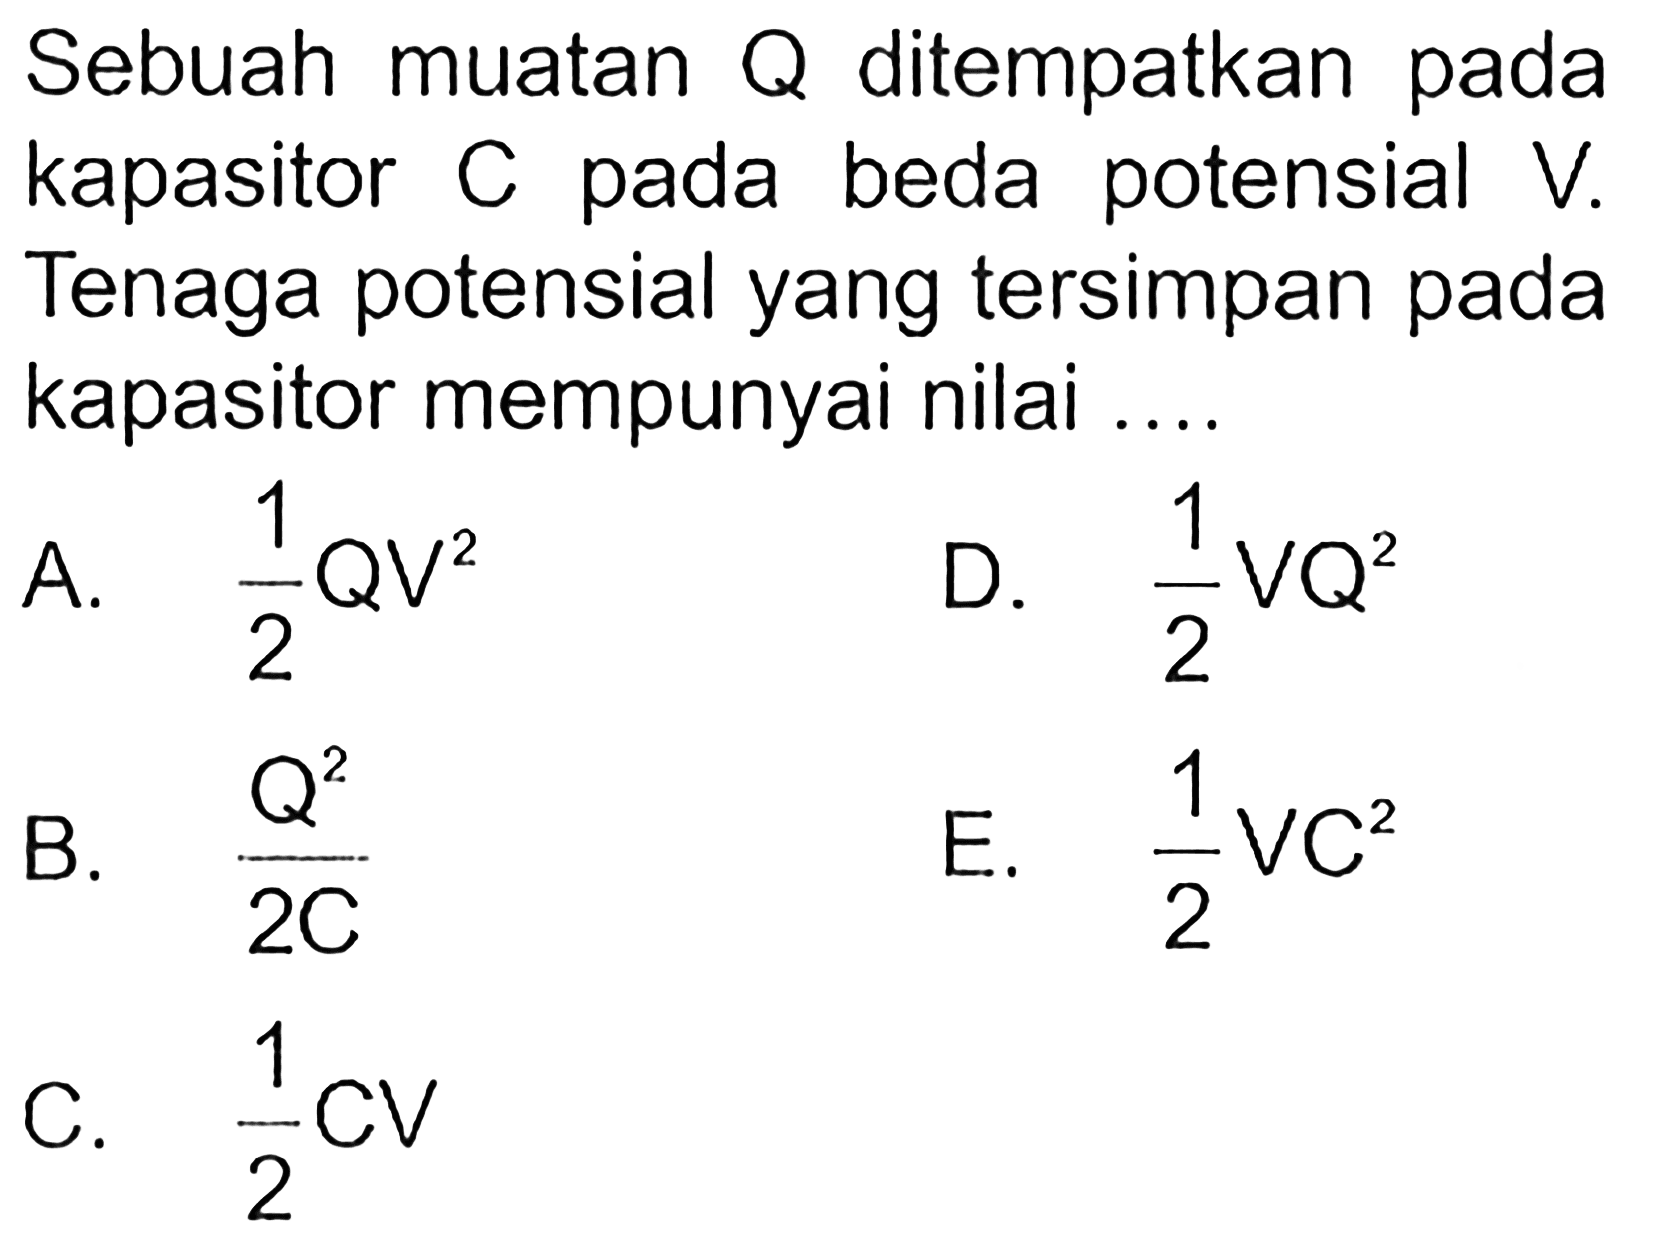 Sebuah muatan Q ditempatkan pada kapasitor C pada beda potensial V. Tenaga potensial yang tersimpan pada kapasitor mempunyai nilai